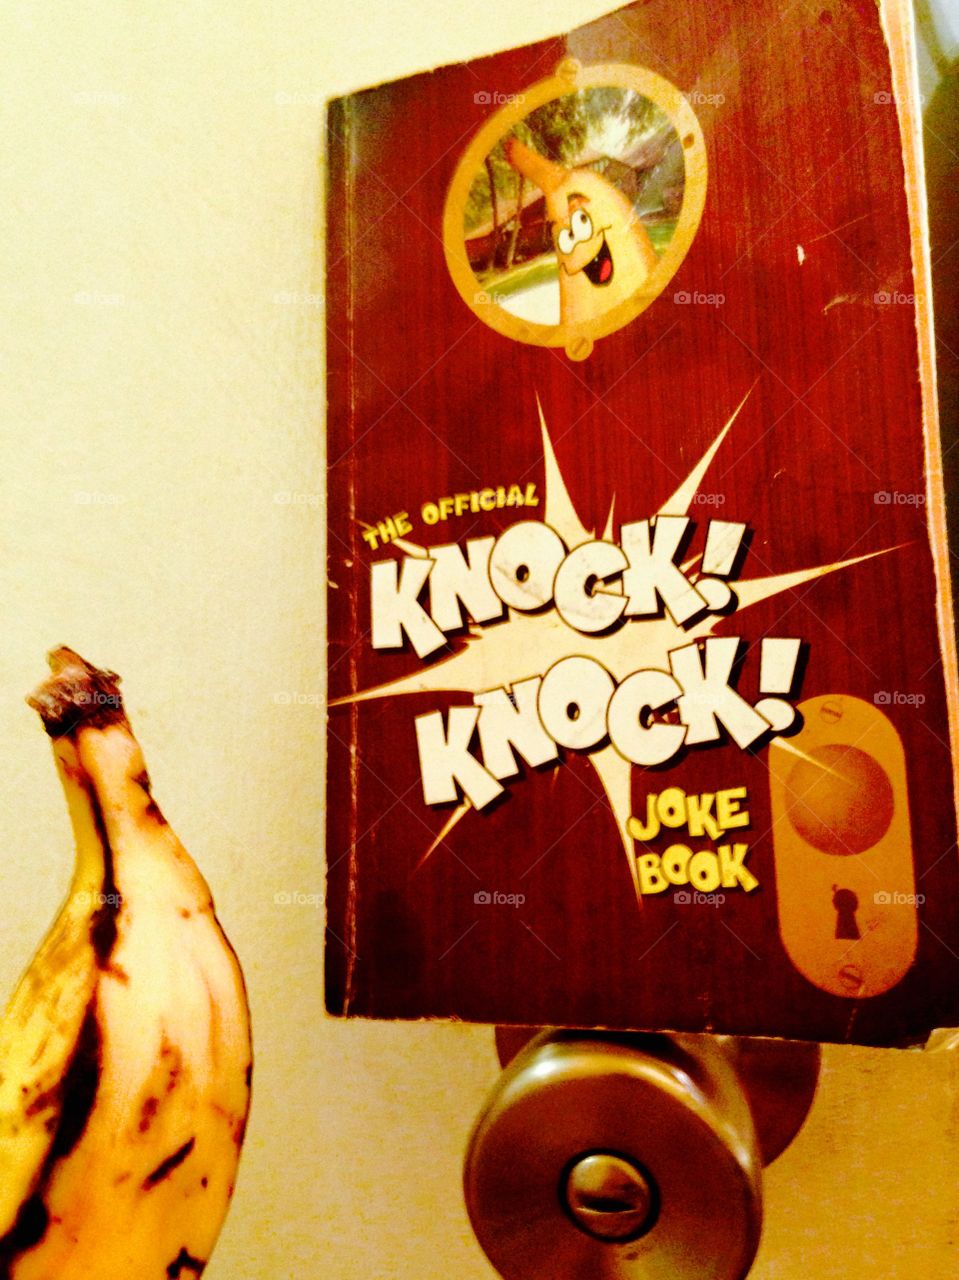 Knock Knock Jokes

Published by:
HappyBrownMonkey 